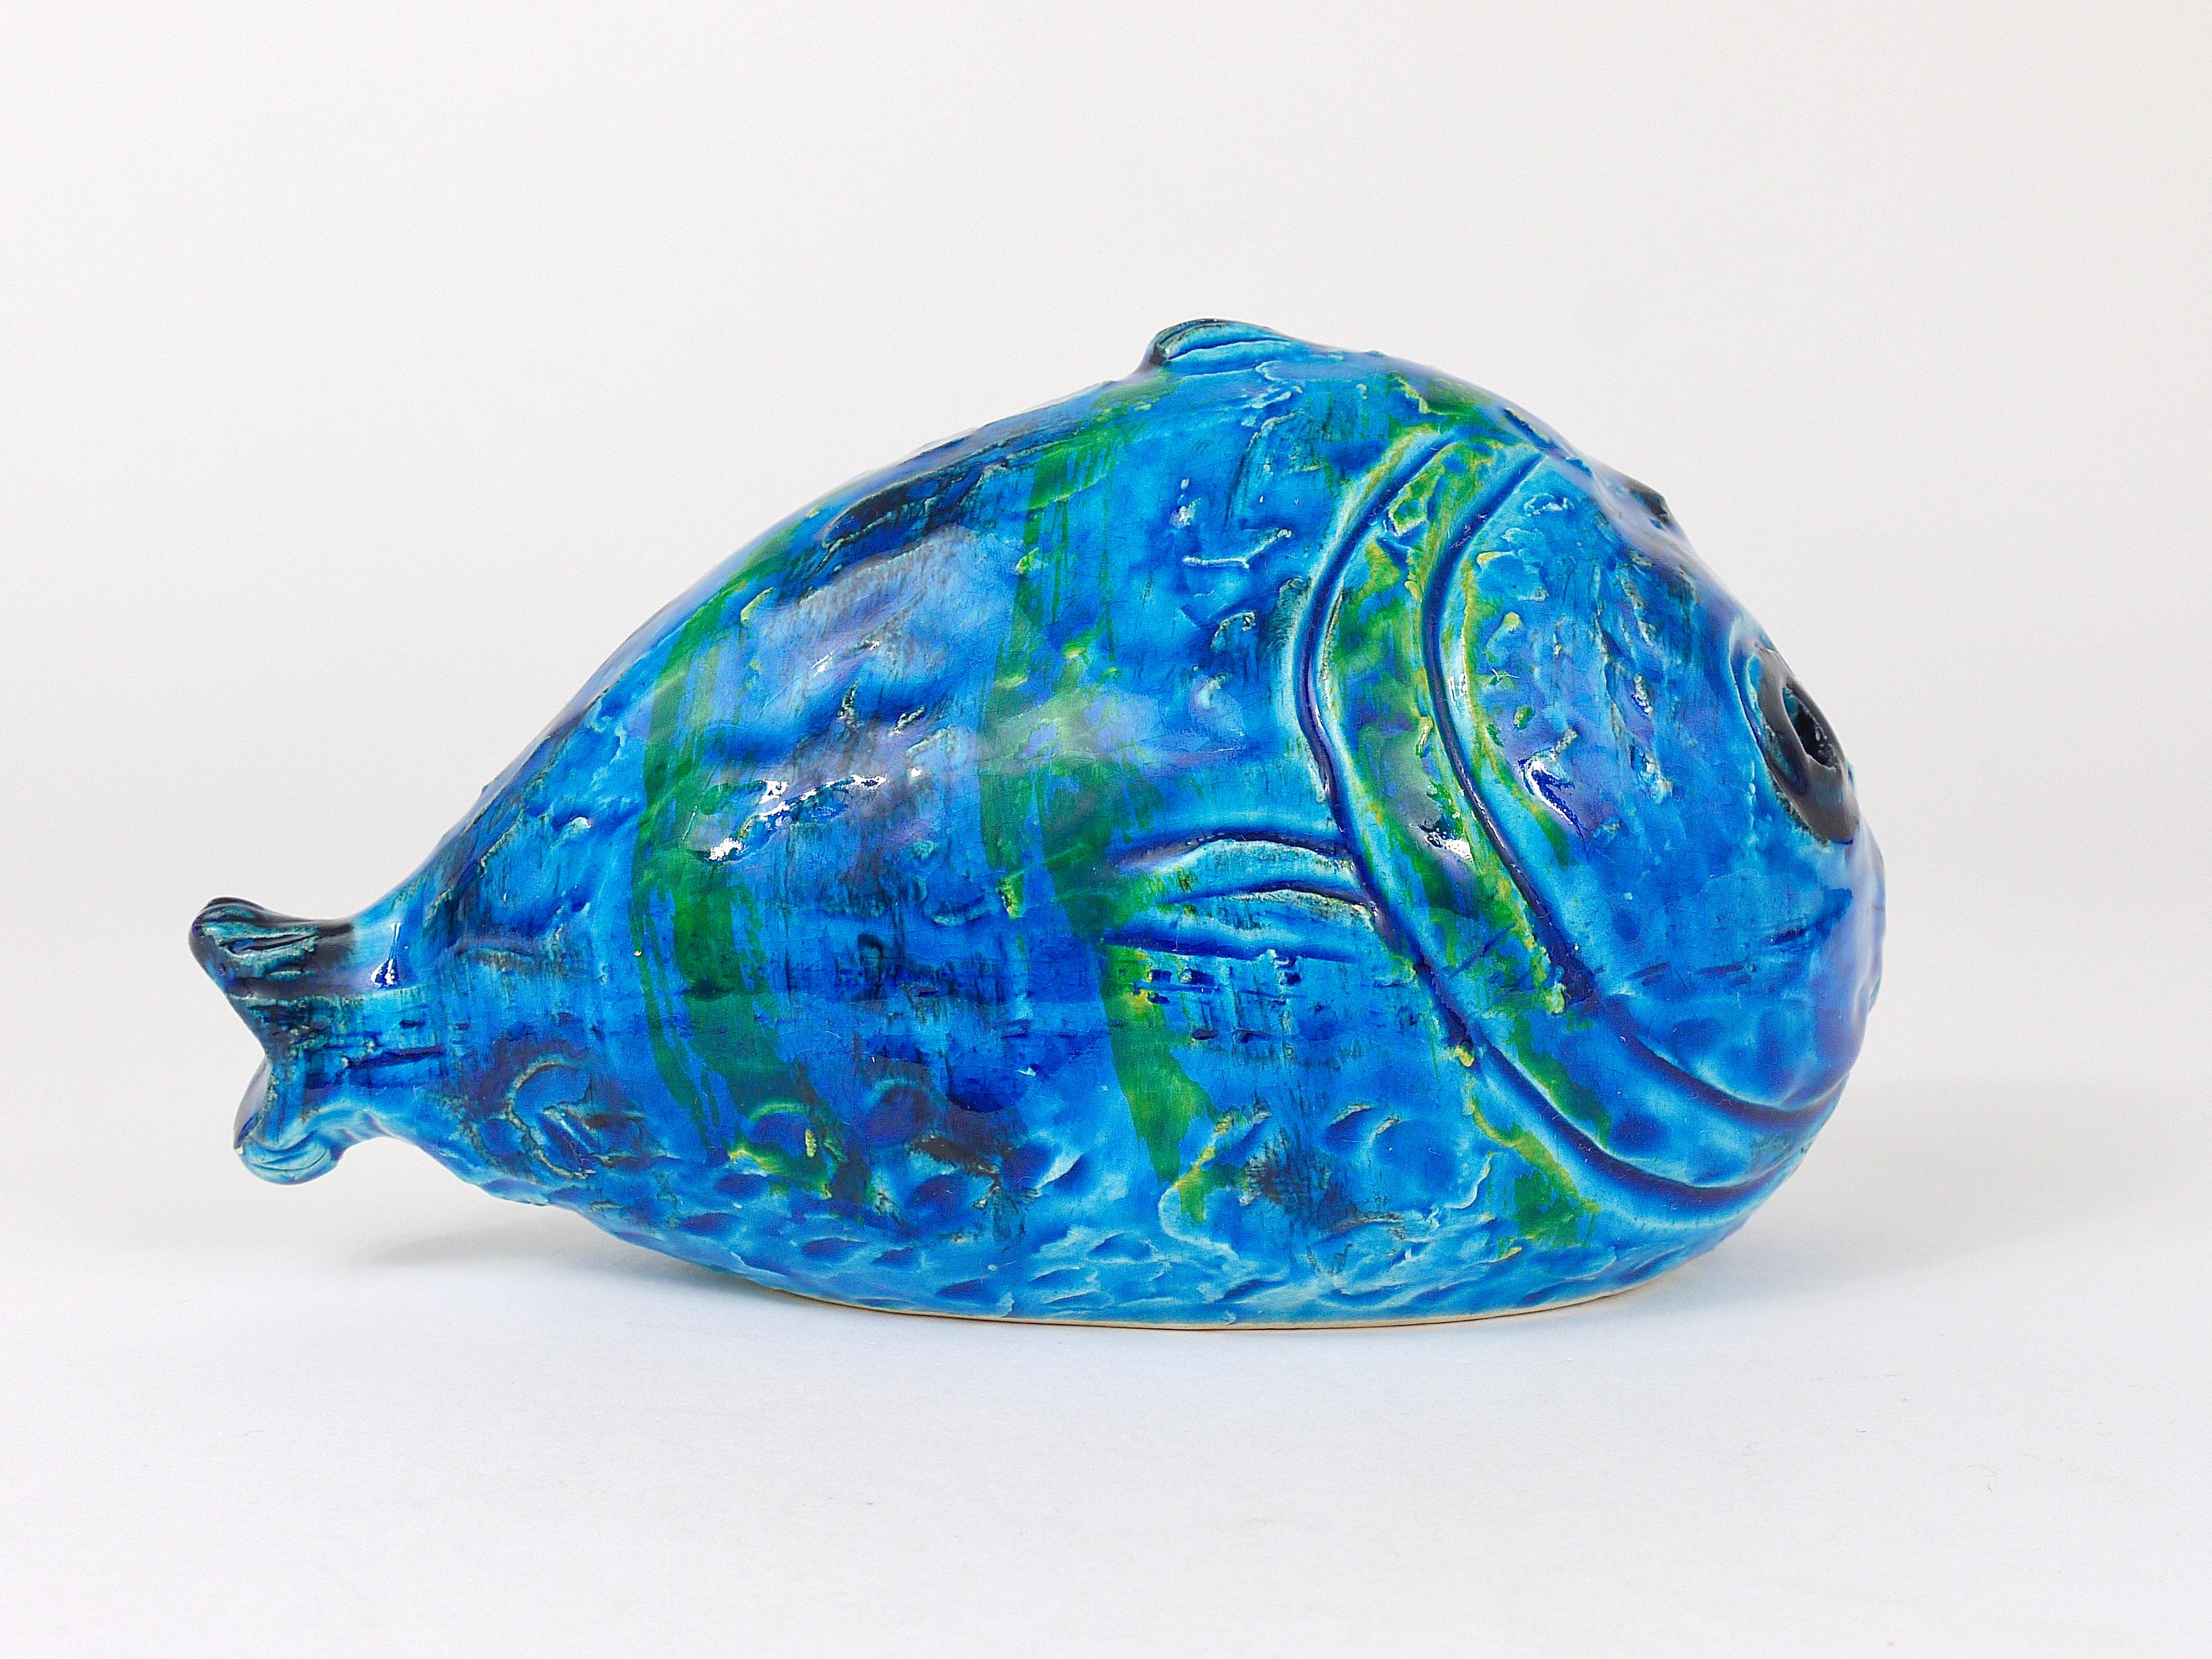 Mid-Century Modern Aldo Londi Bitossi Rimini Blue Glazed Fish Sculpture Figurine, Italy, 1950s For Sale